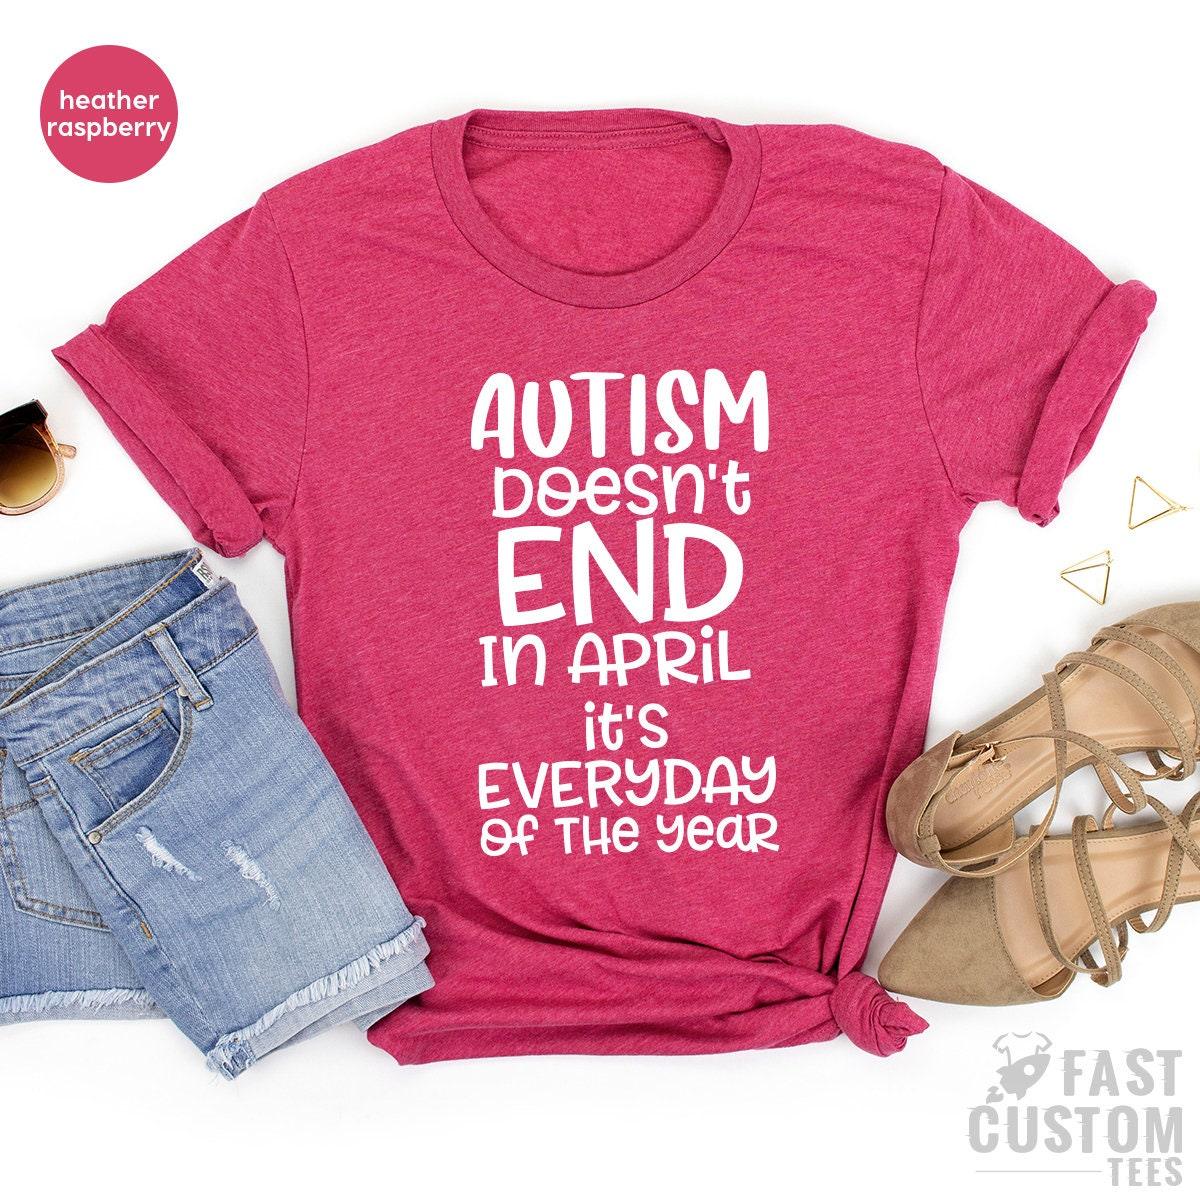 Autism Mom Shirt, Autism Awareness Tee, Autism Aware Shirt, Autism Doesn't End In April, Autism Gift, Autism Support Shirt, Autism Dad Shirt - Fastdeliverytees.com